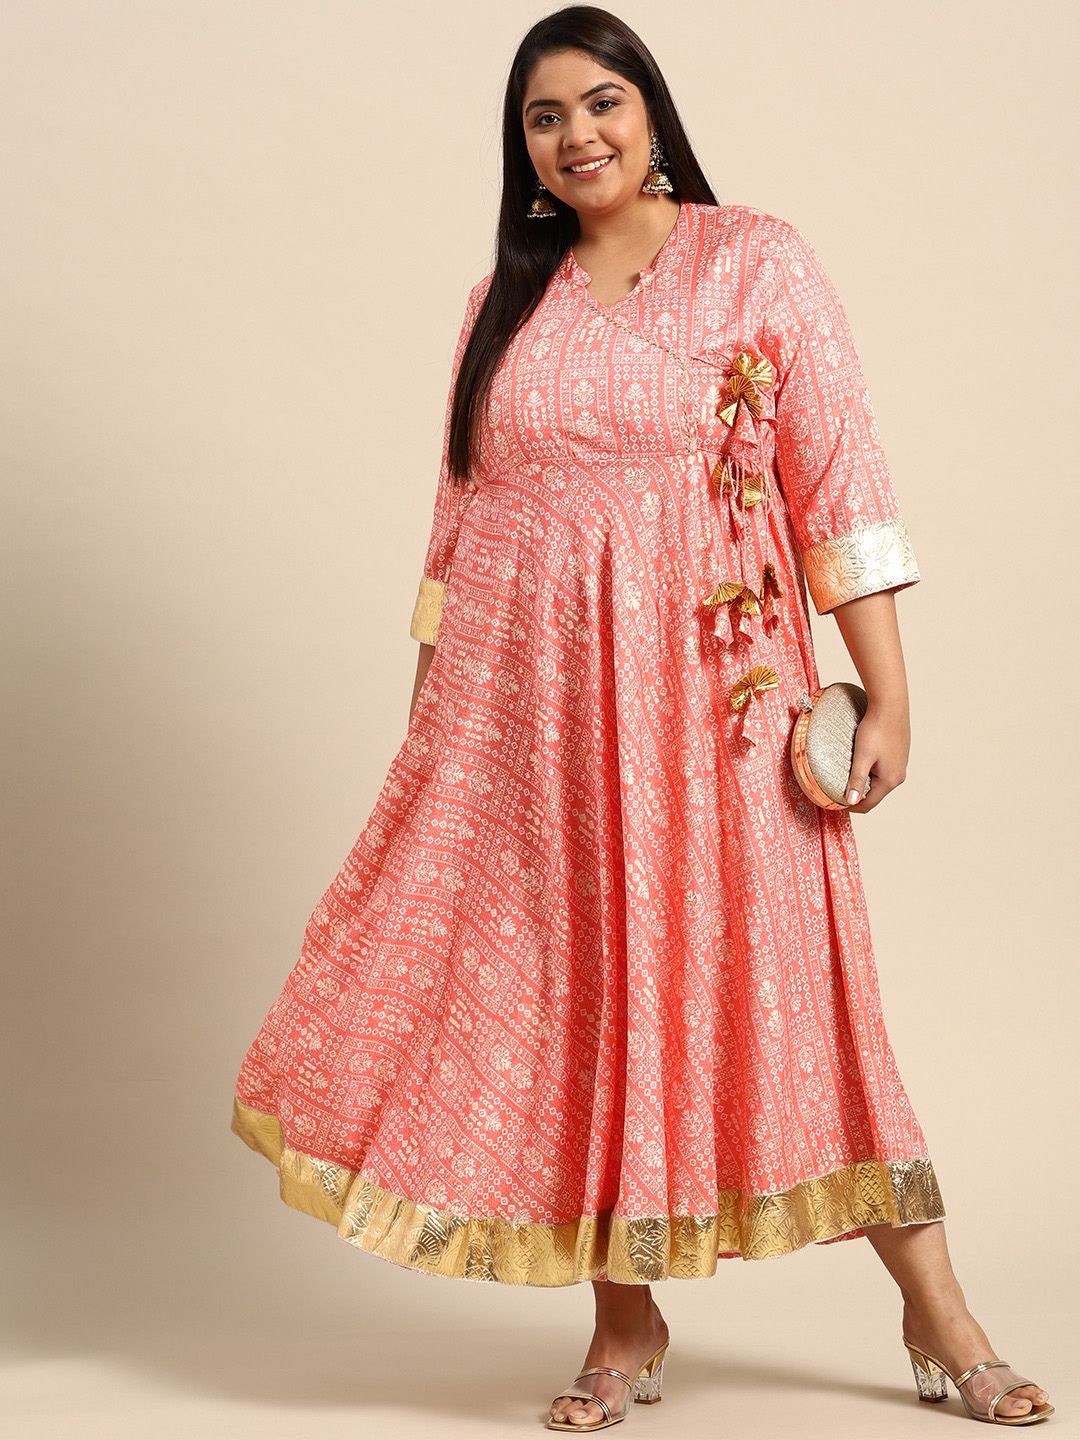 RANGMAYEE Pink & White Floral Liva Ethnic Gotta Patti Foil Printed Angrakha Maxi Dress Price in India